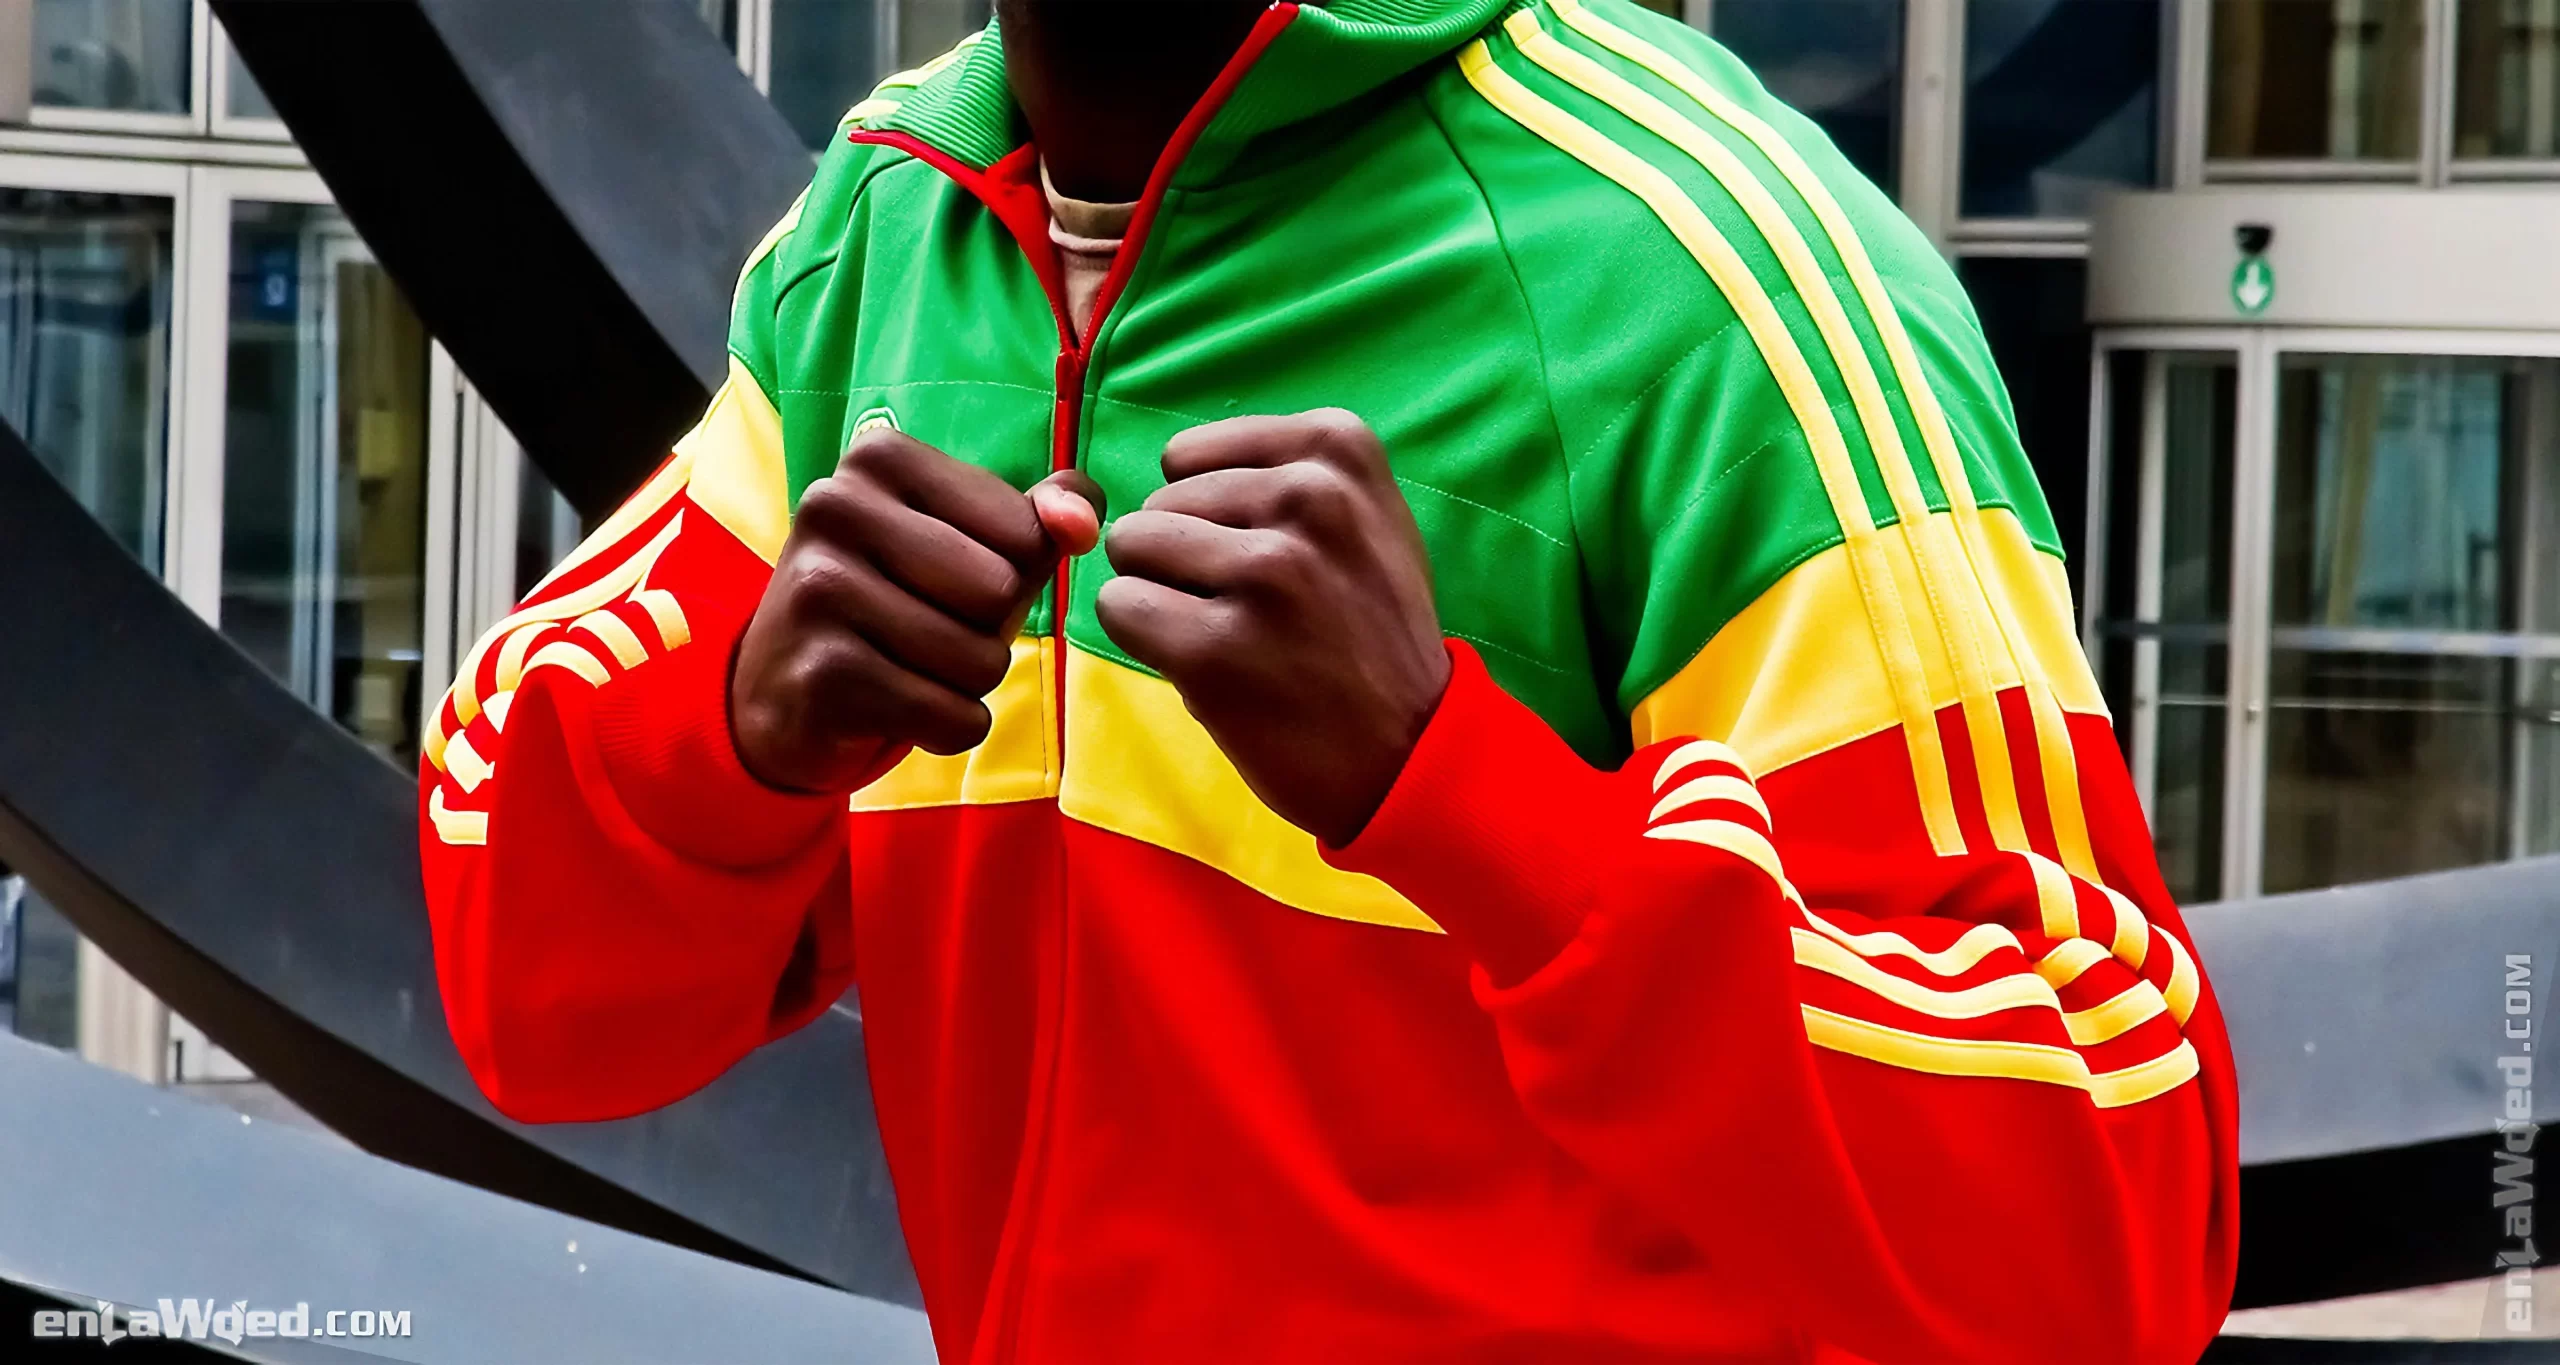 Men's 2008 Ethiopia Track Top by Adidas Originals: Masterclass (EnLawded.com file #lmchk89710ip2y121468kg9st)